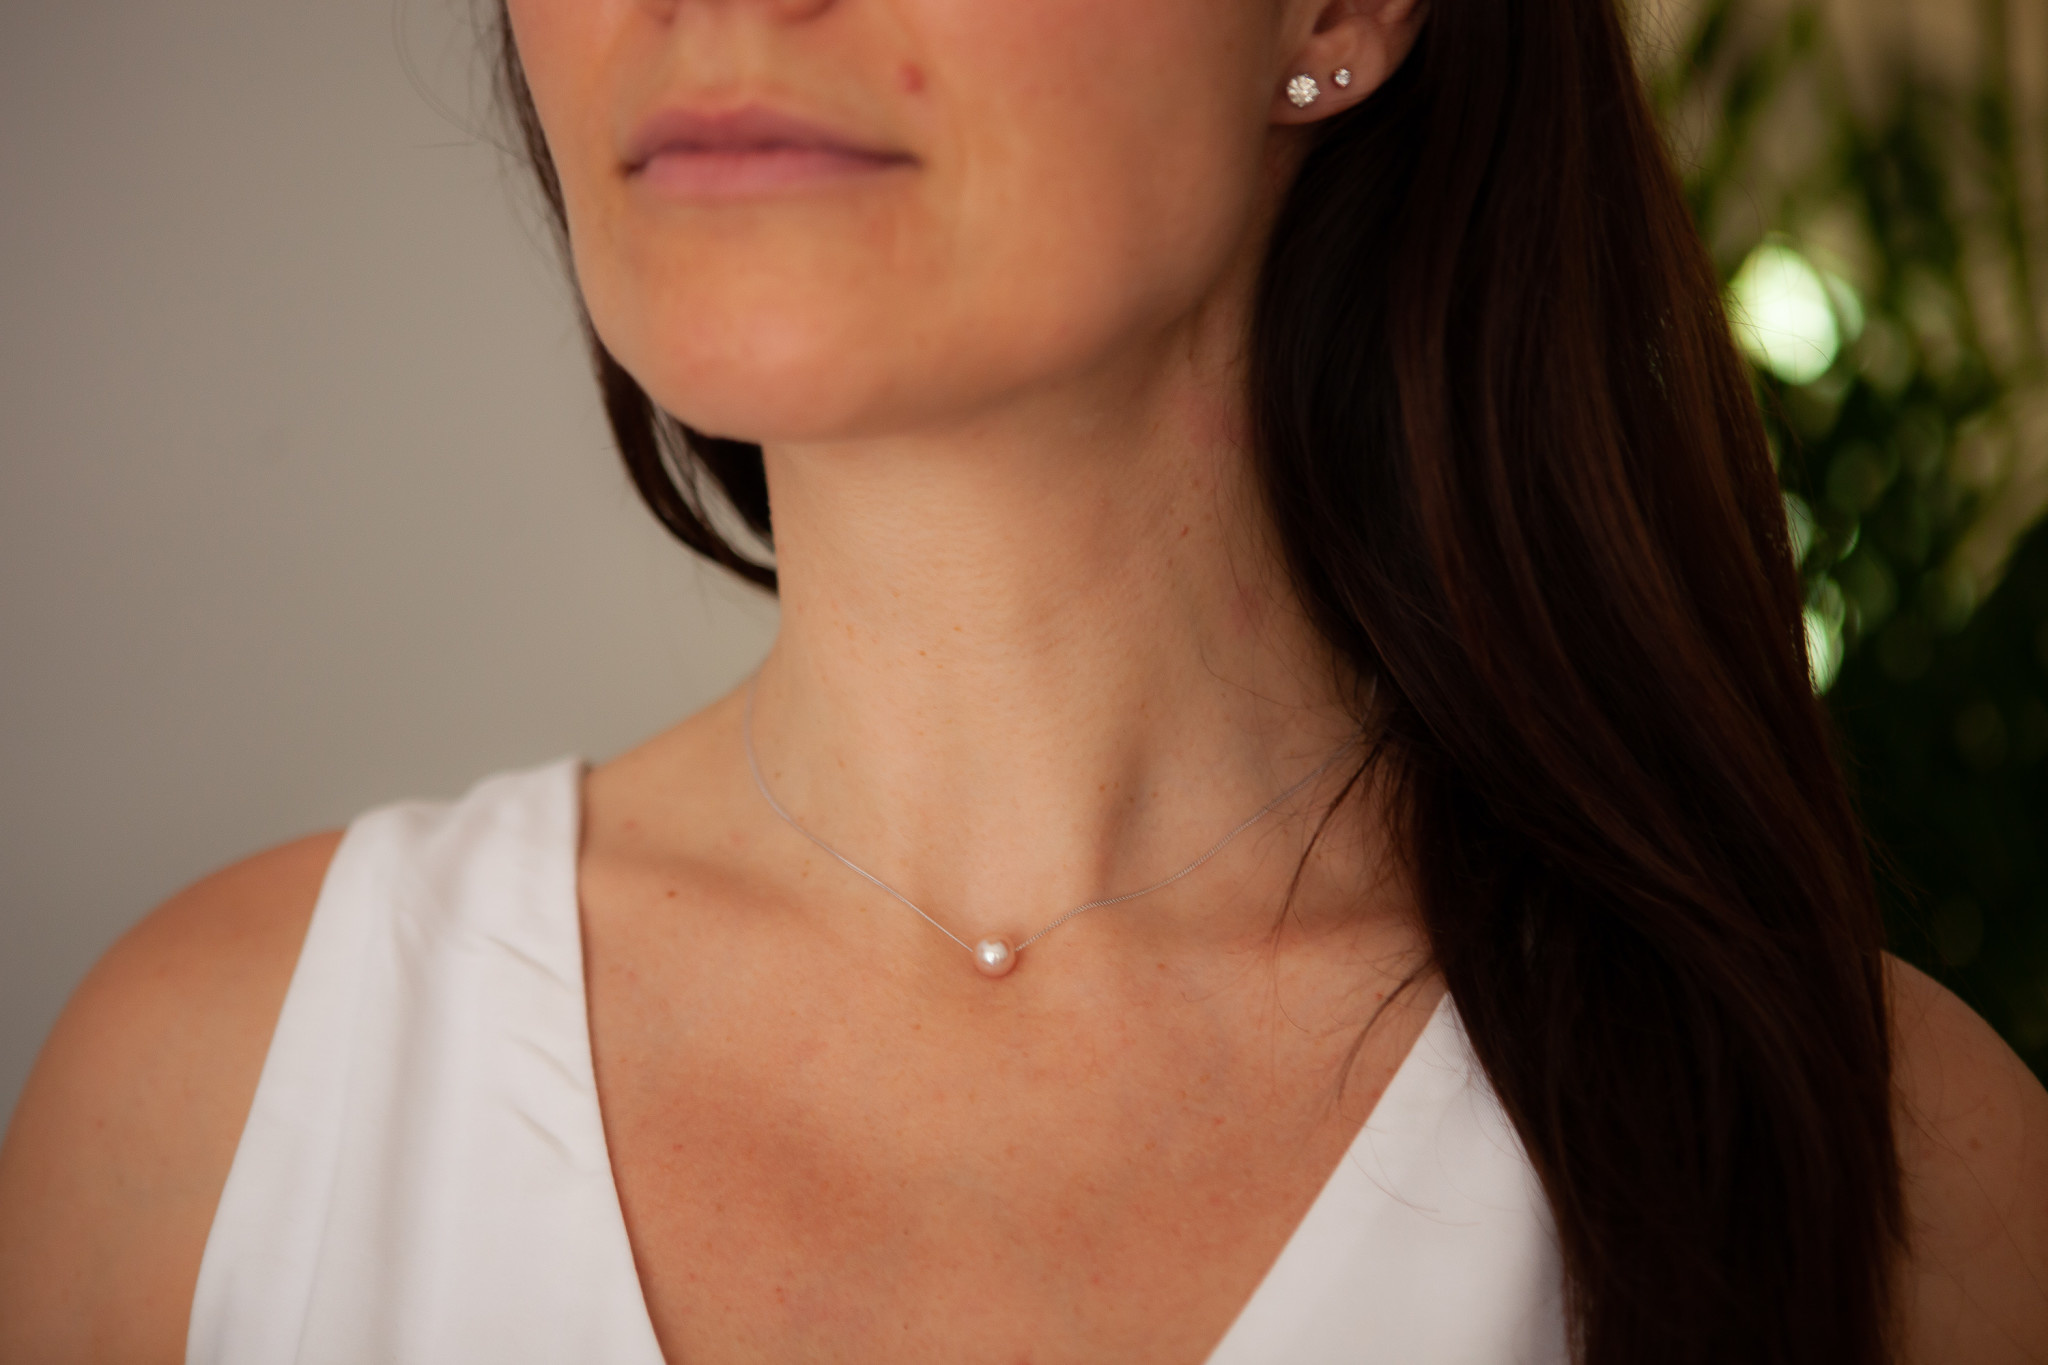 Pearl Necklace Sterling Silver Necklace Baroque Pearl Jewelry - Etsy |  Pearl earrings, Coin pearl earrings, Pearl earrings dangle